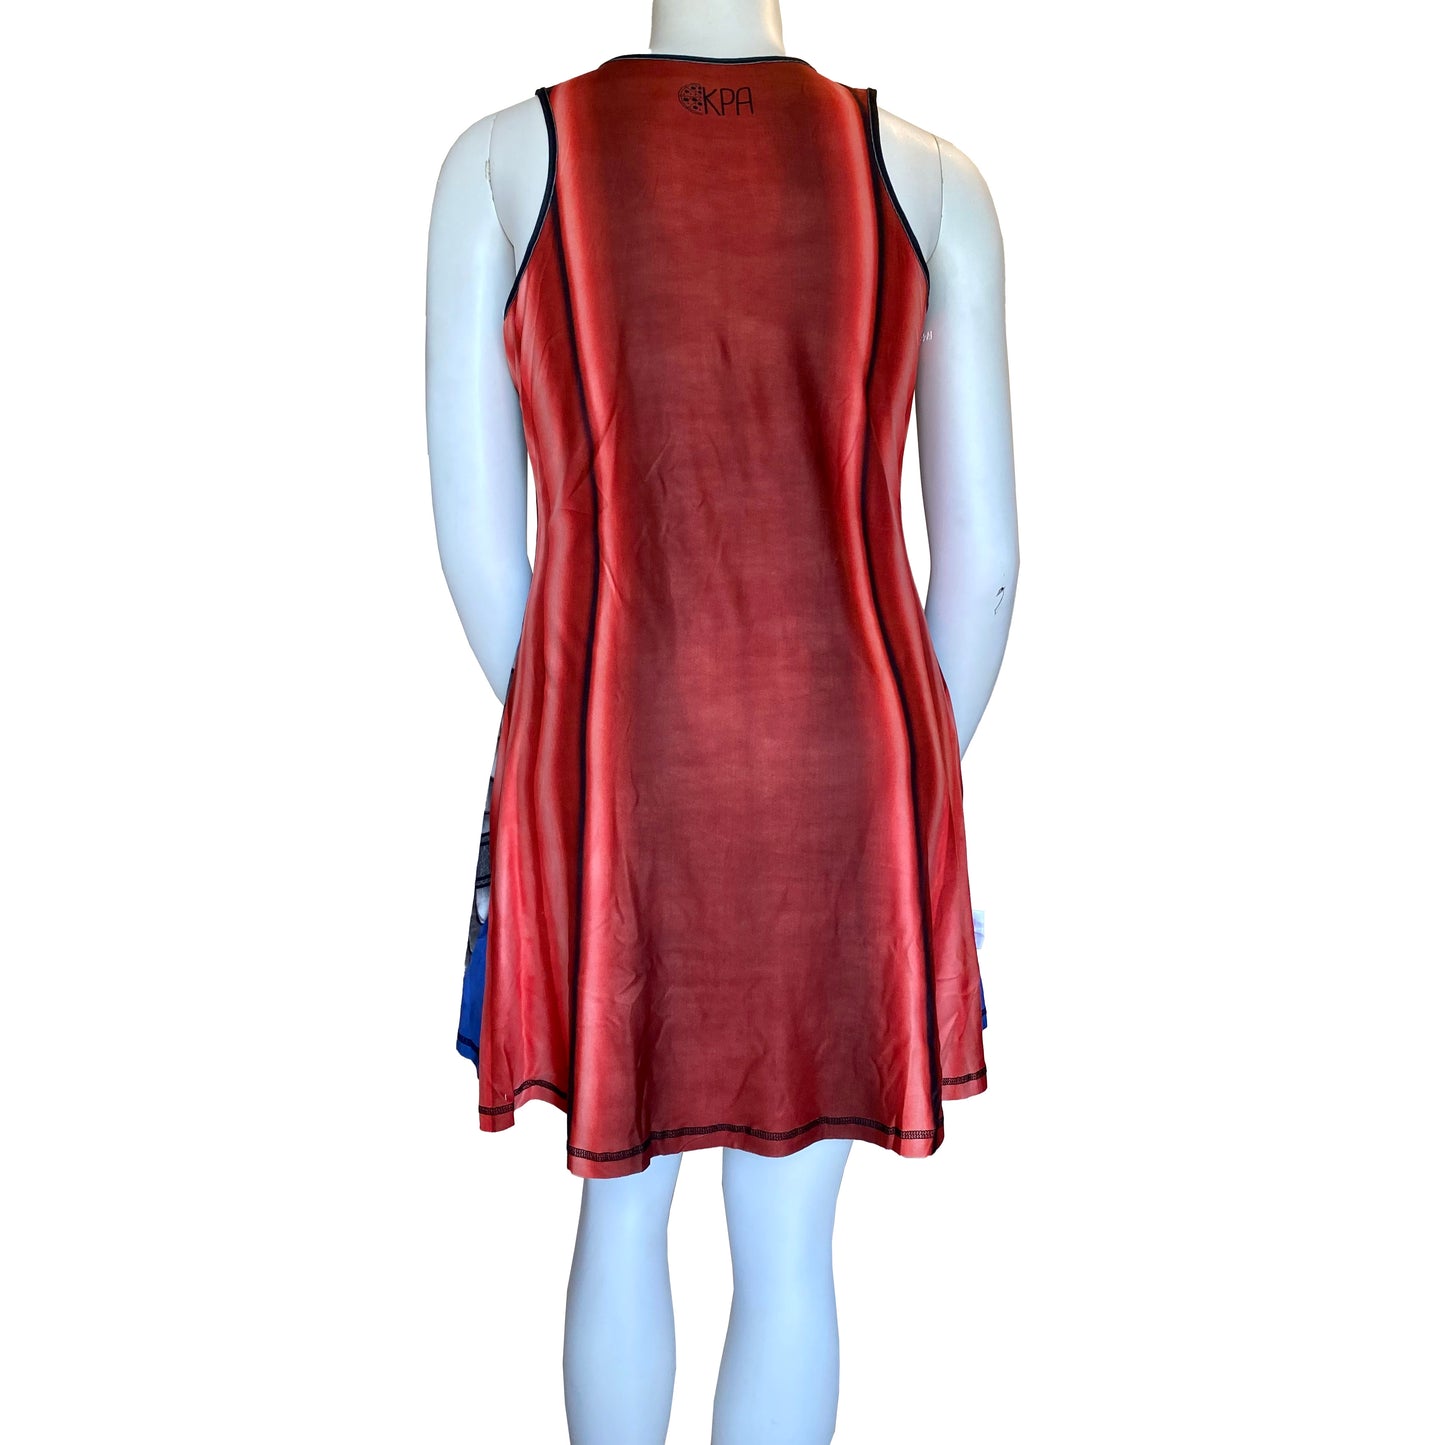 Loki / Thor Inspired REVERSIBLE Sleeveless Dress